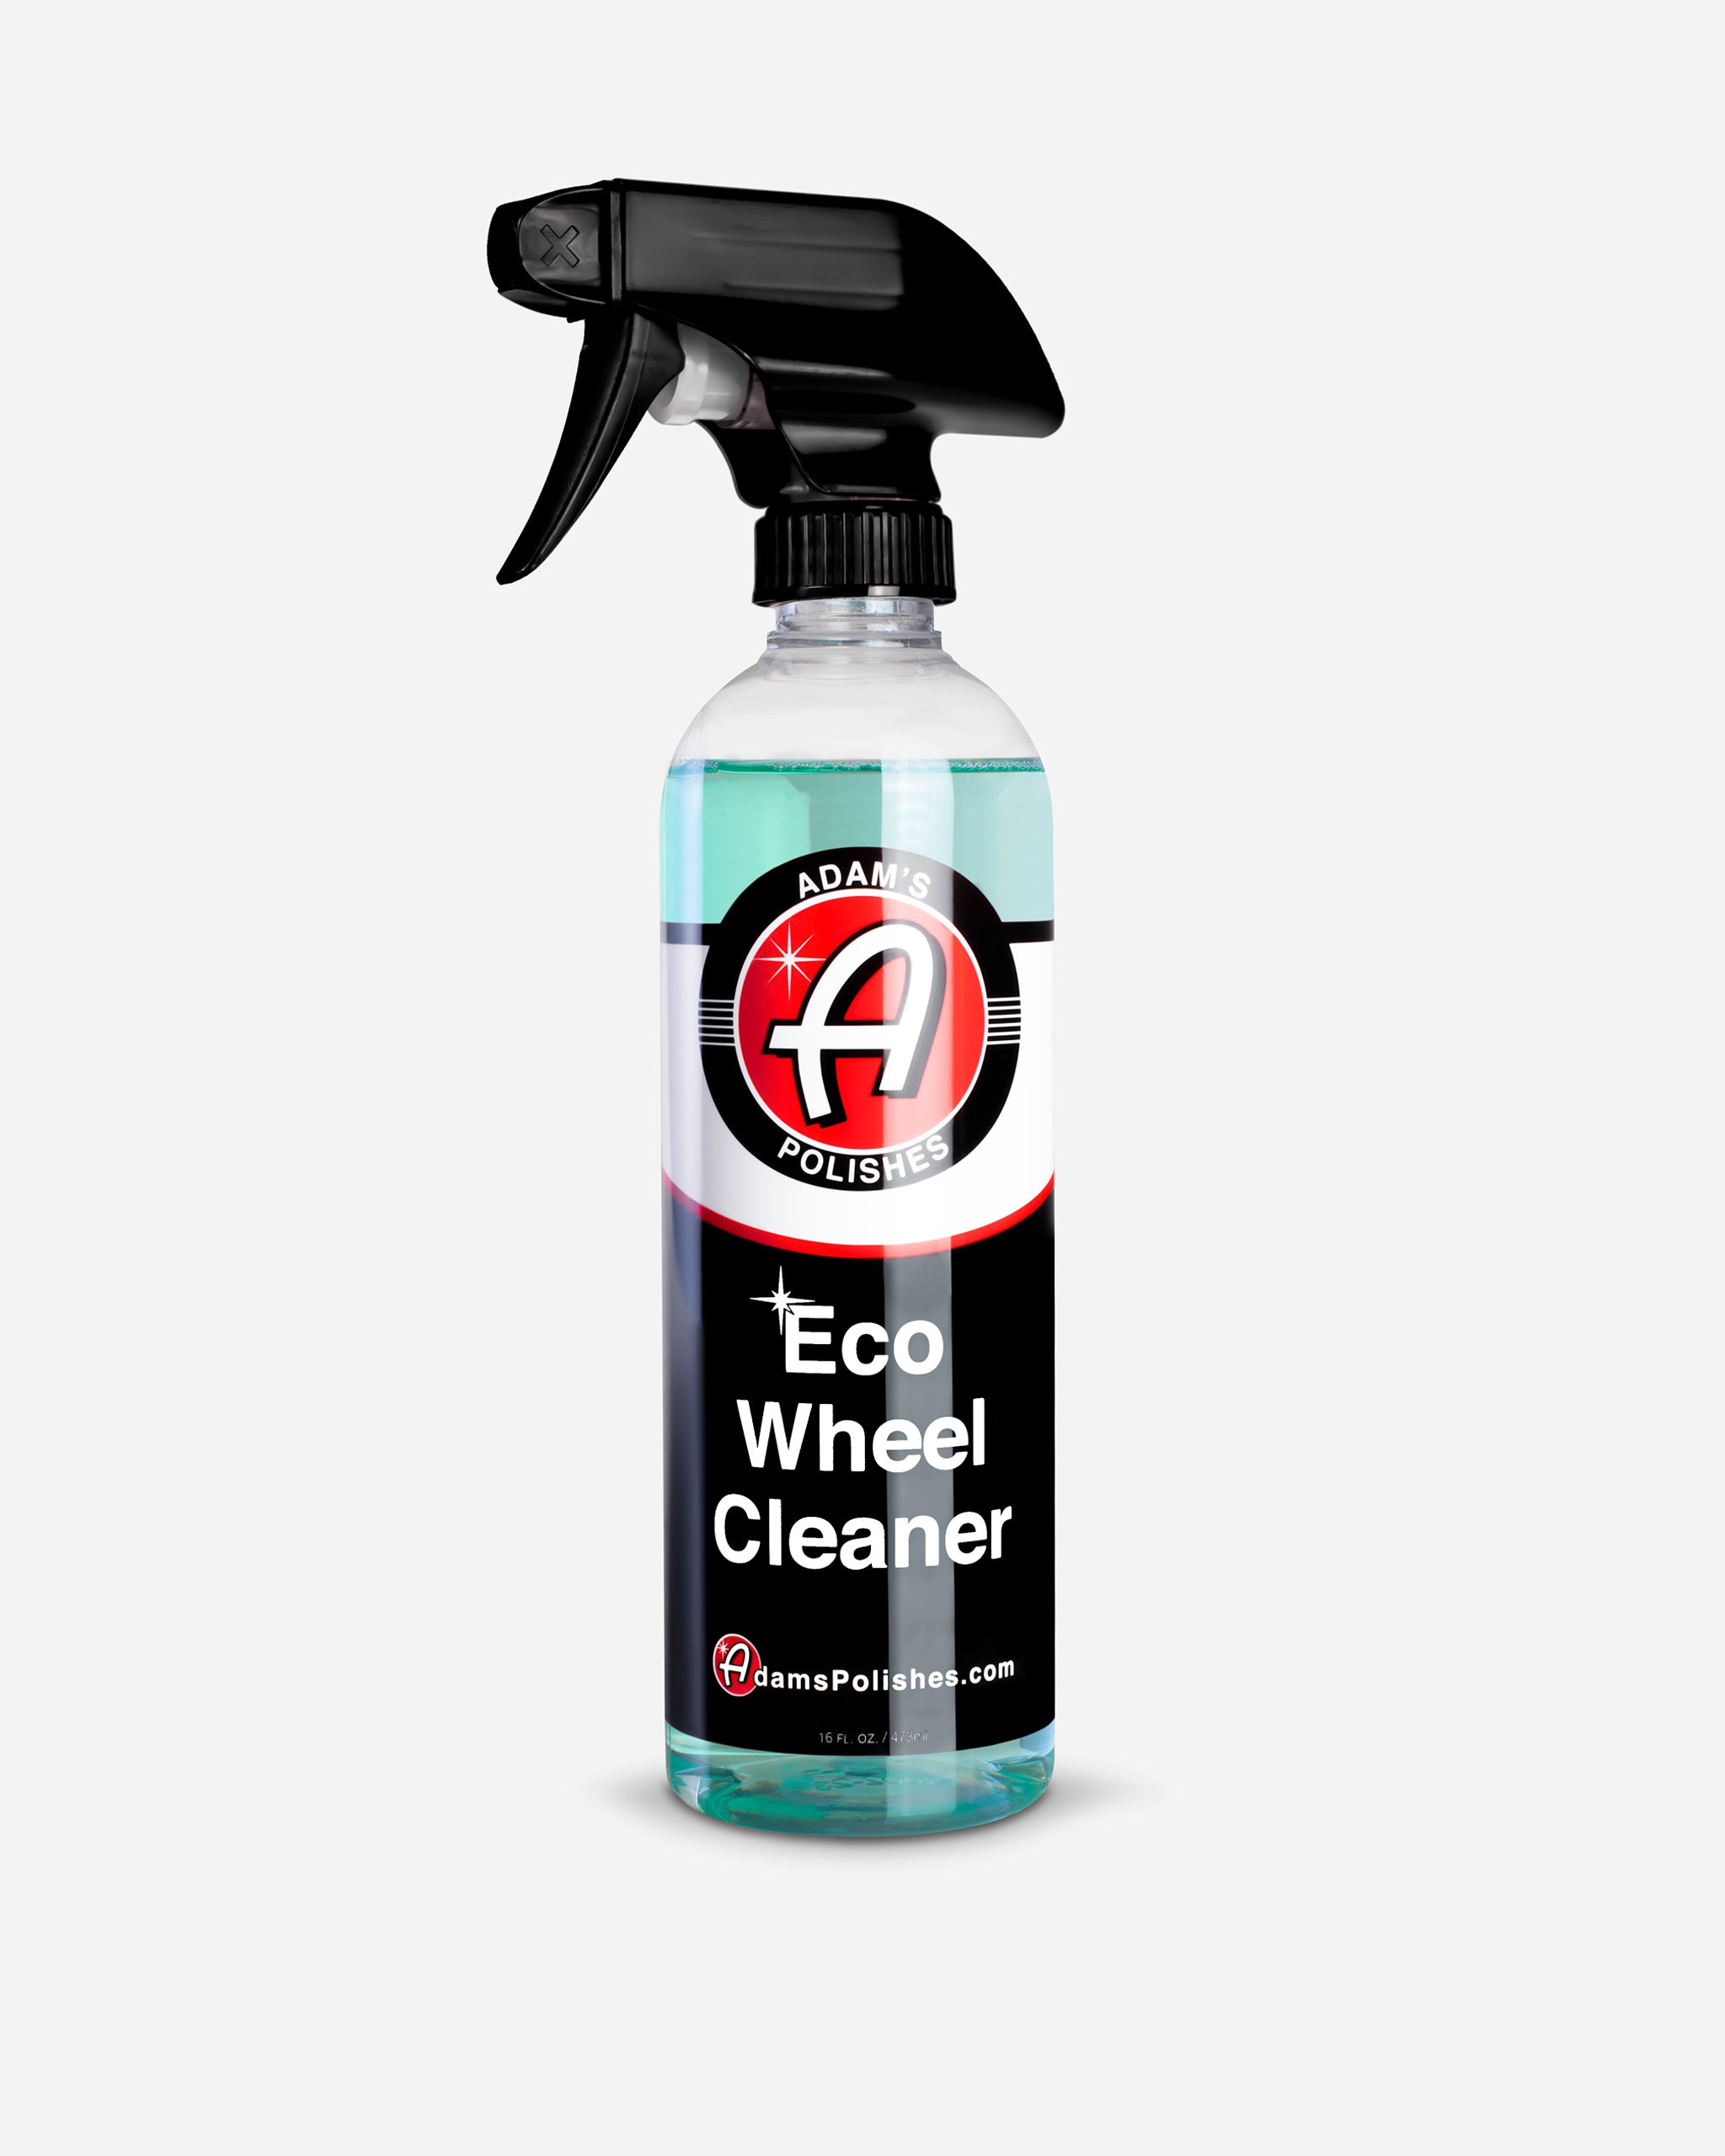 ECO CLEAN - Abrillantador de Neumáticos - Ecológico